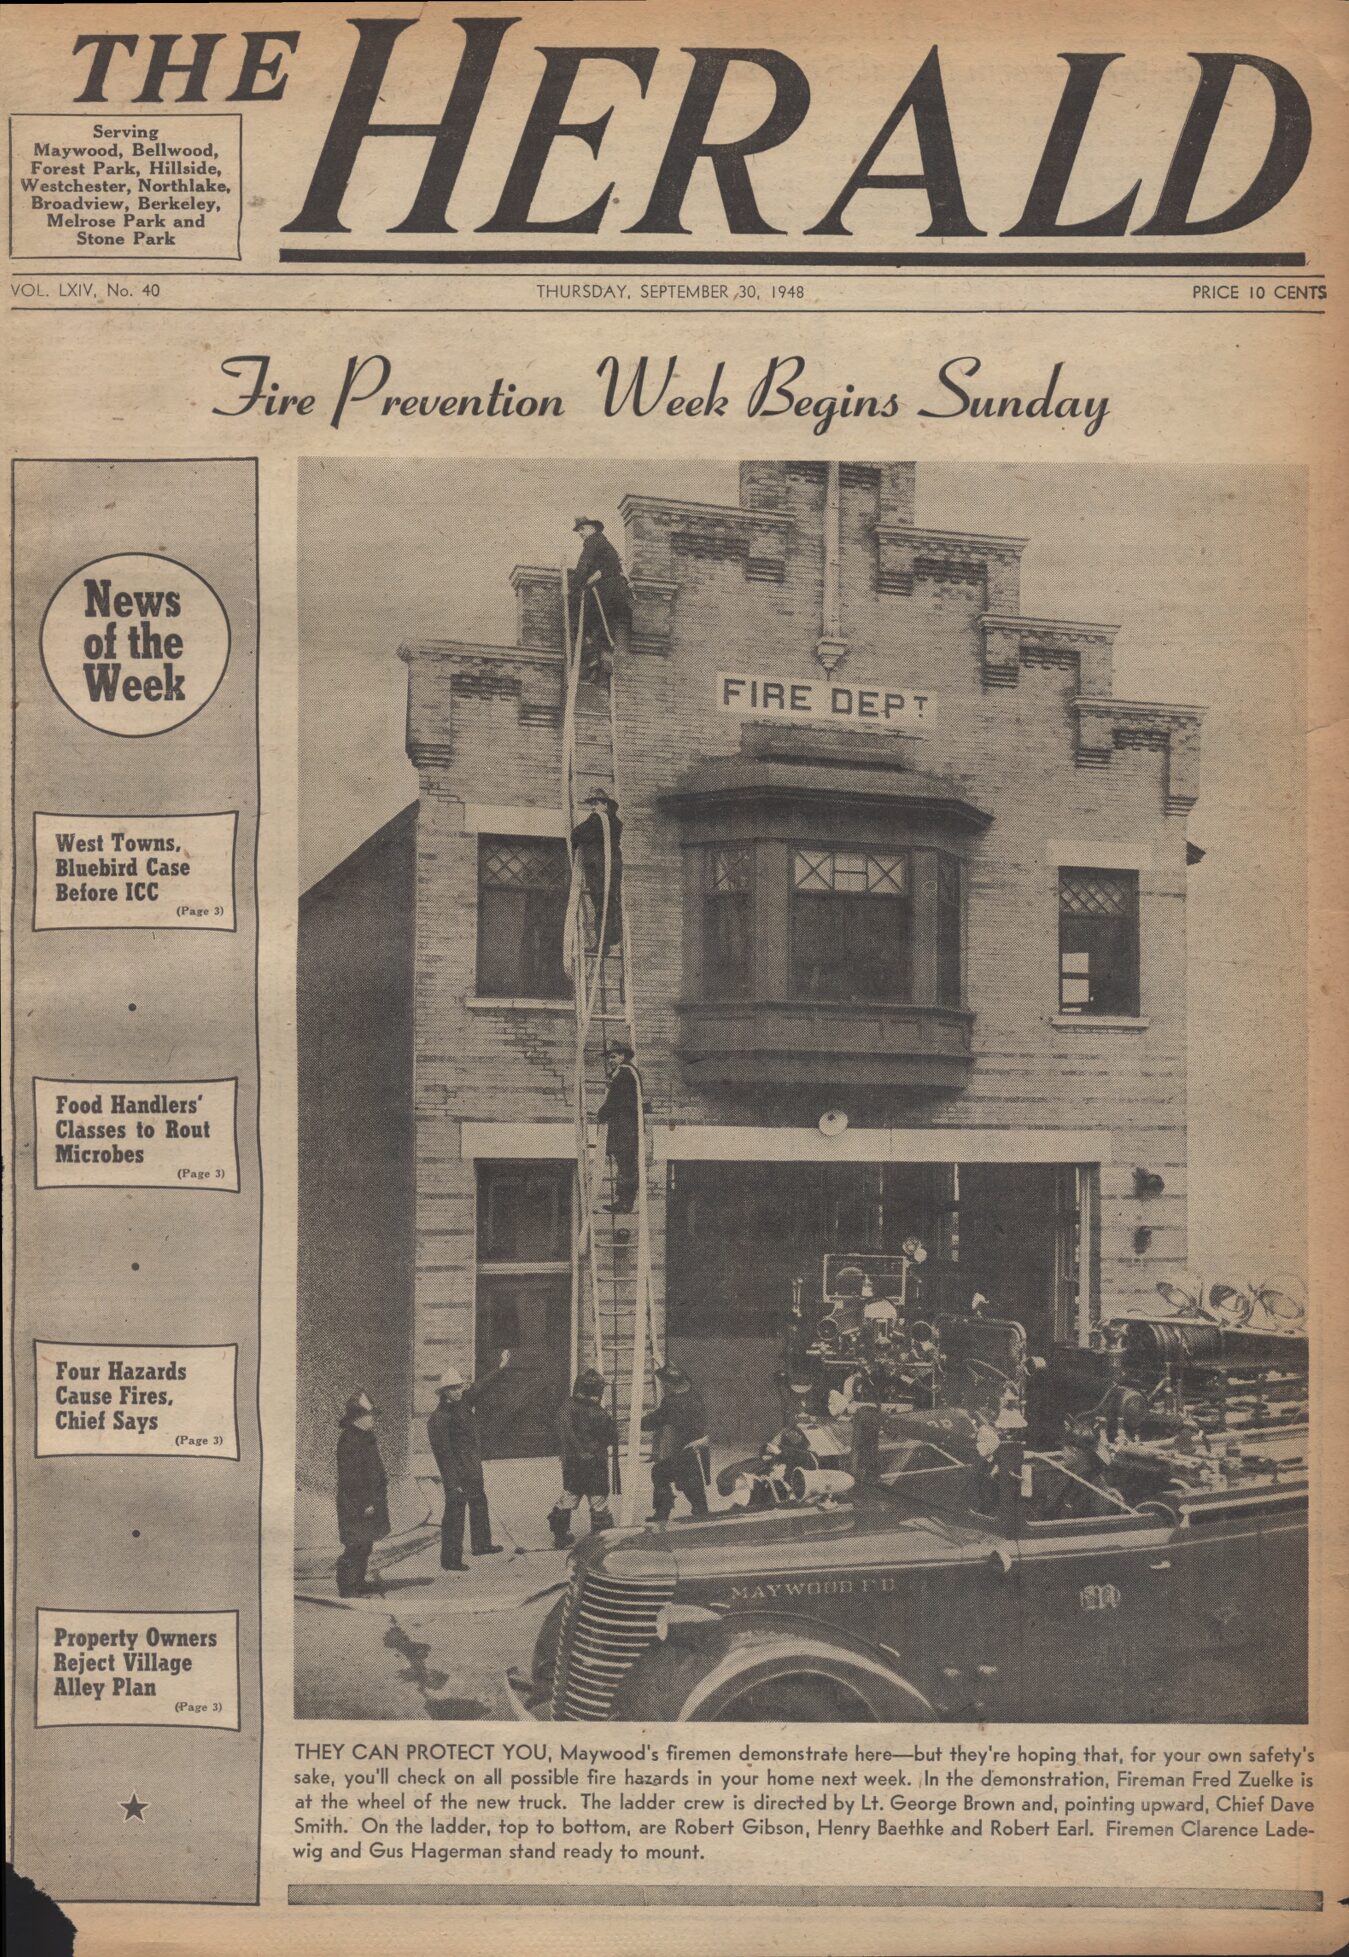 The Herald – 19480930